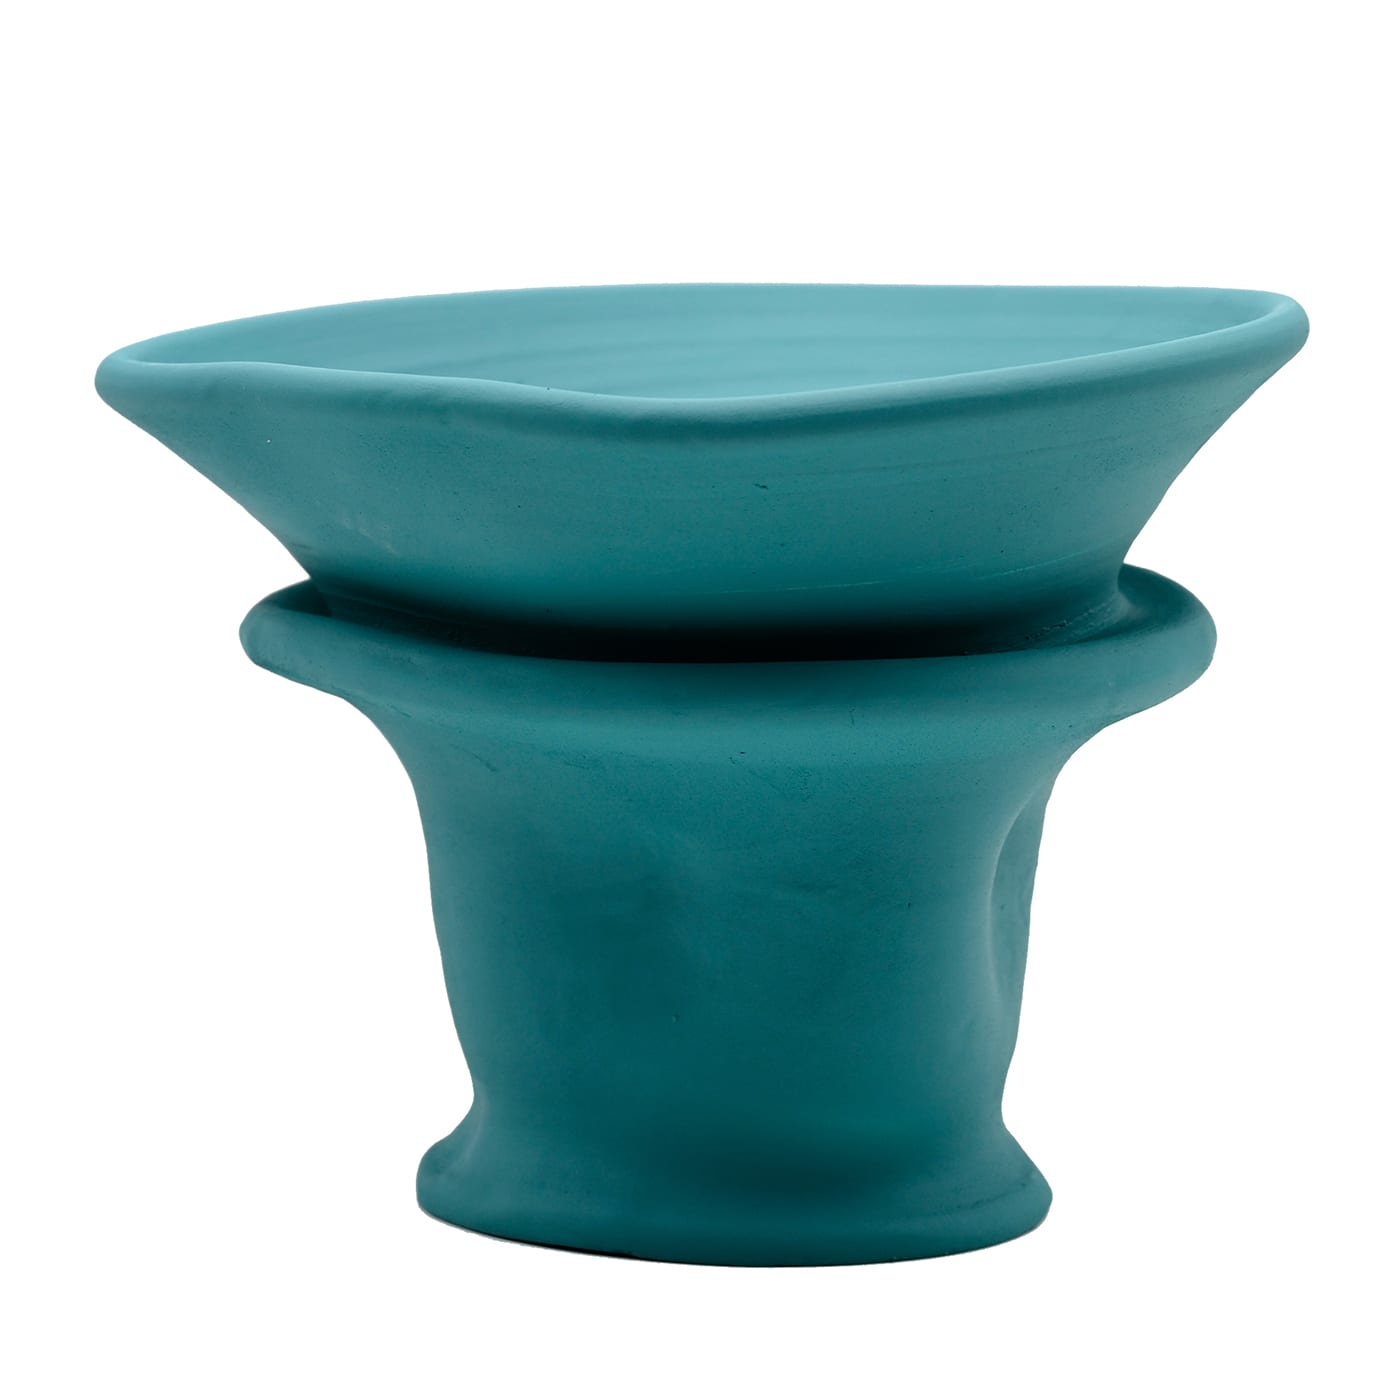 Turquoise Vase #2 - Ovo - Idee e Manufatti